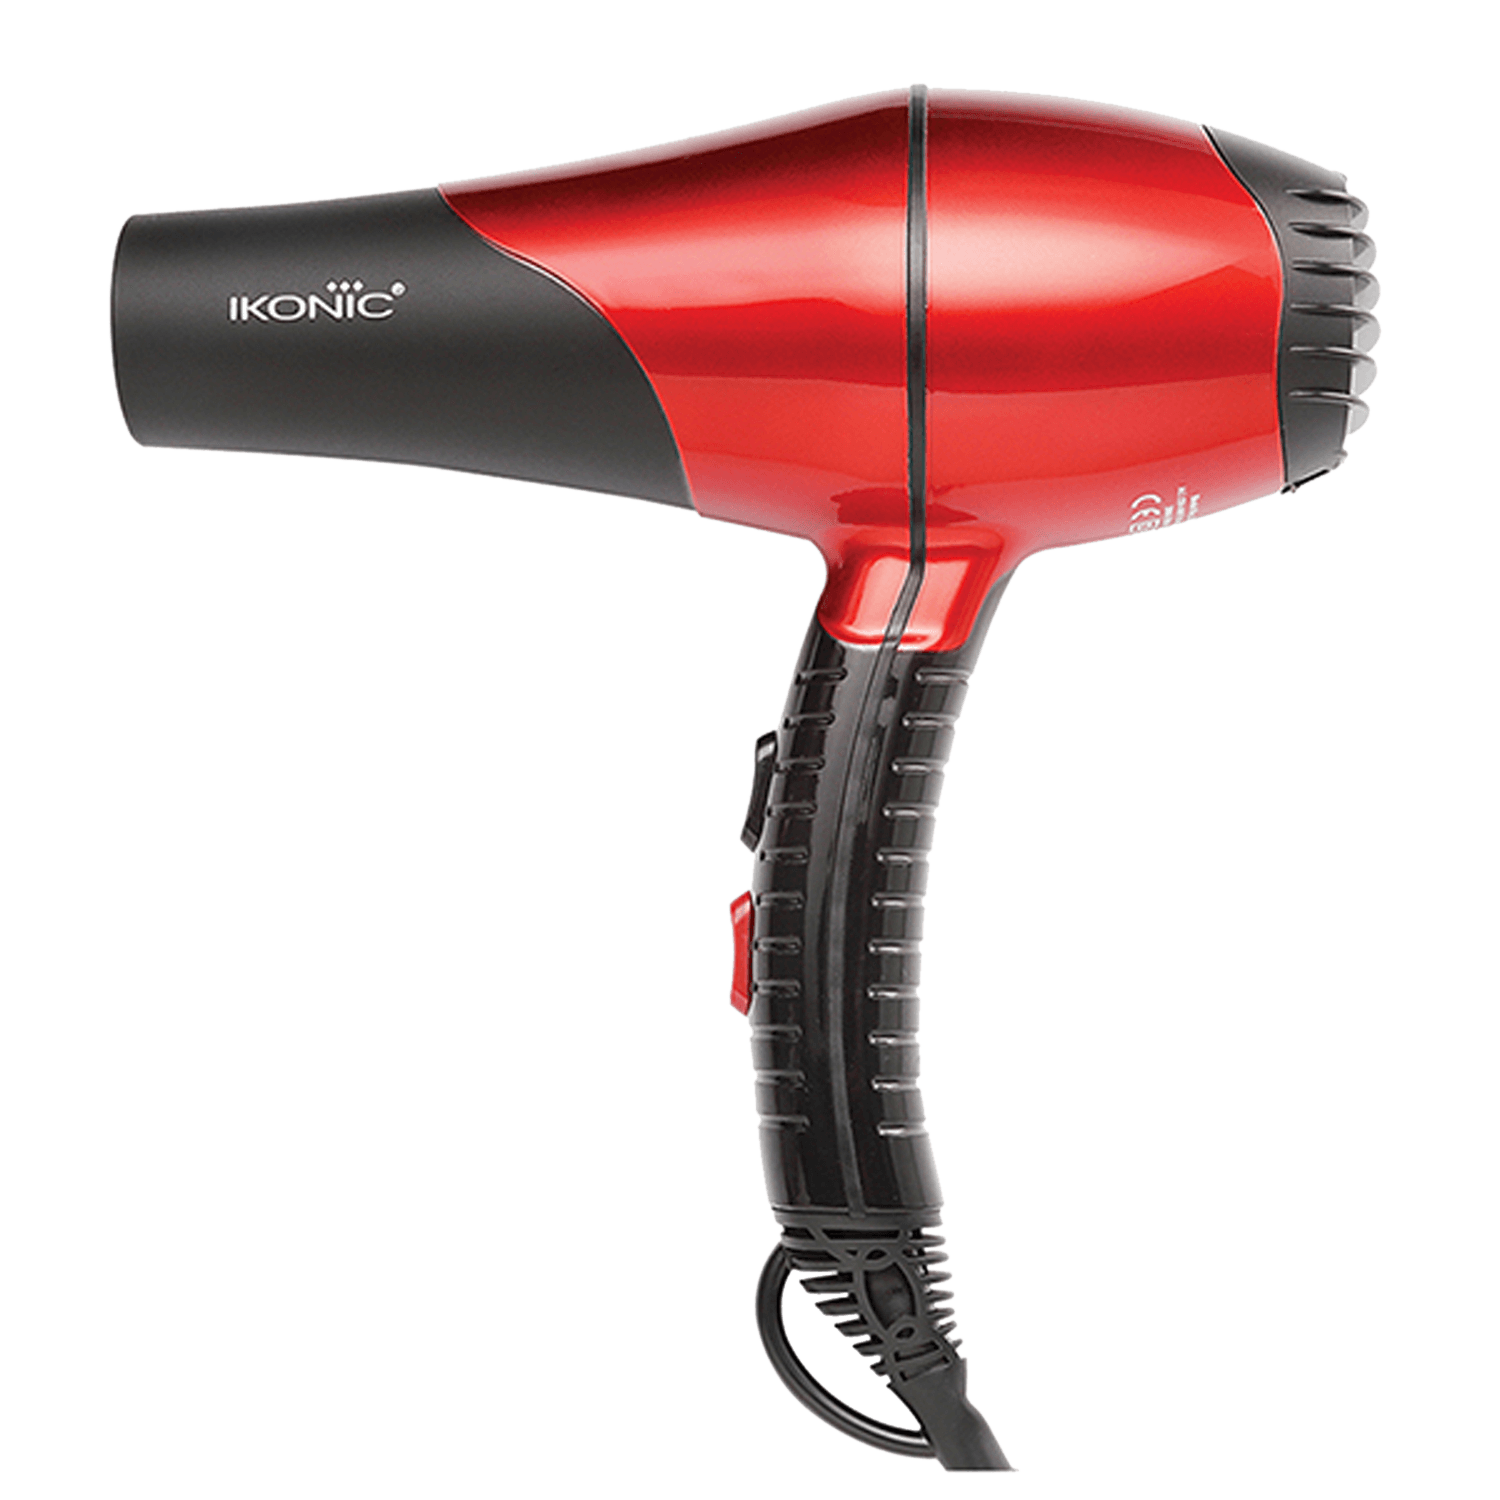 Ikonic Professional | Ikonic Professional 2200 Pro Hair Dryer (Red & Black)